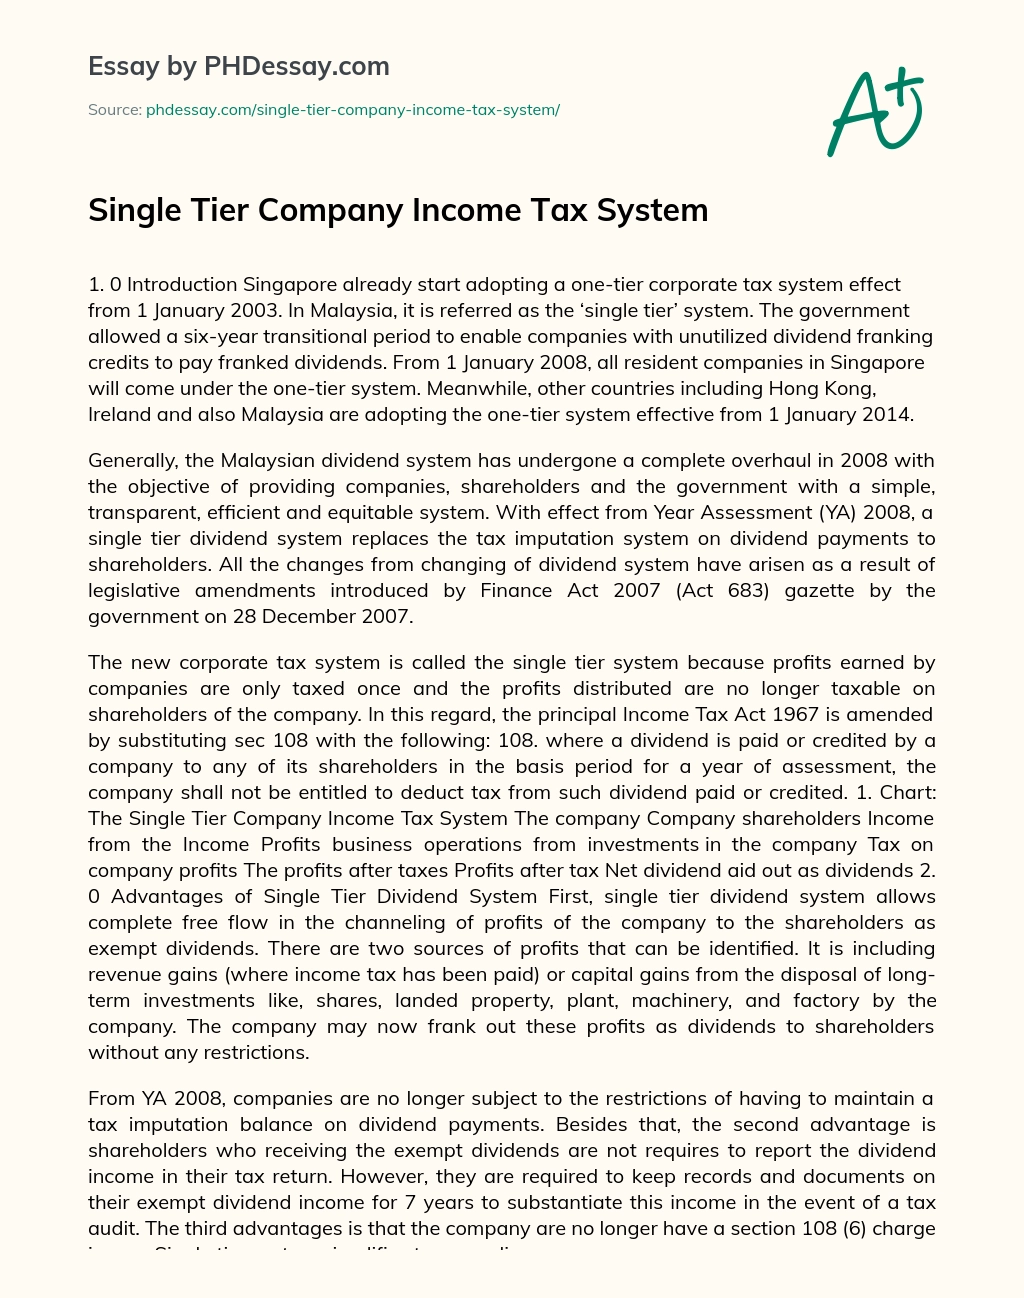 Single Tier Company Income Tax System essay